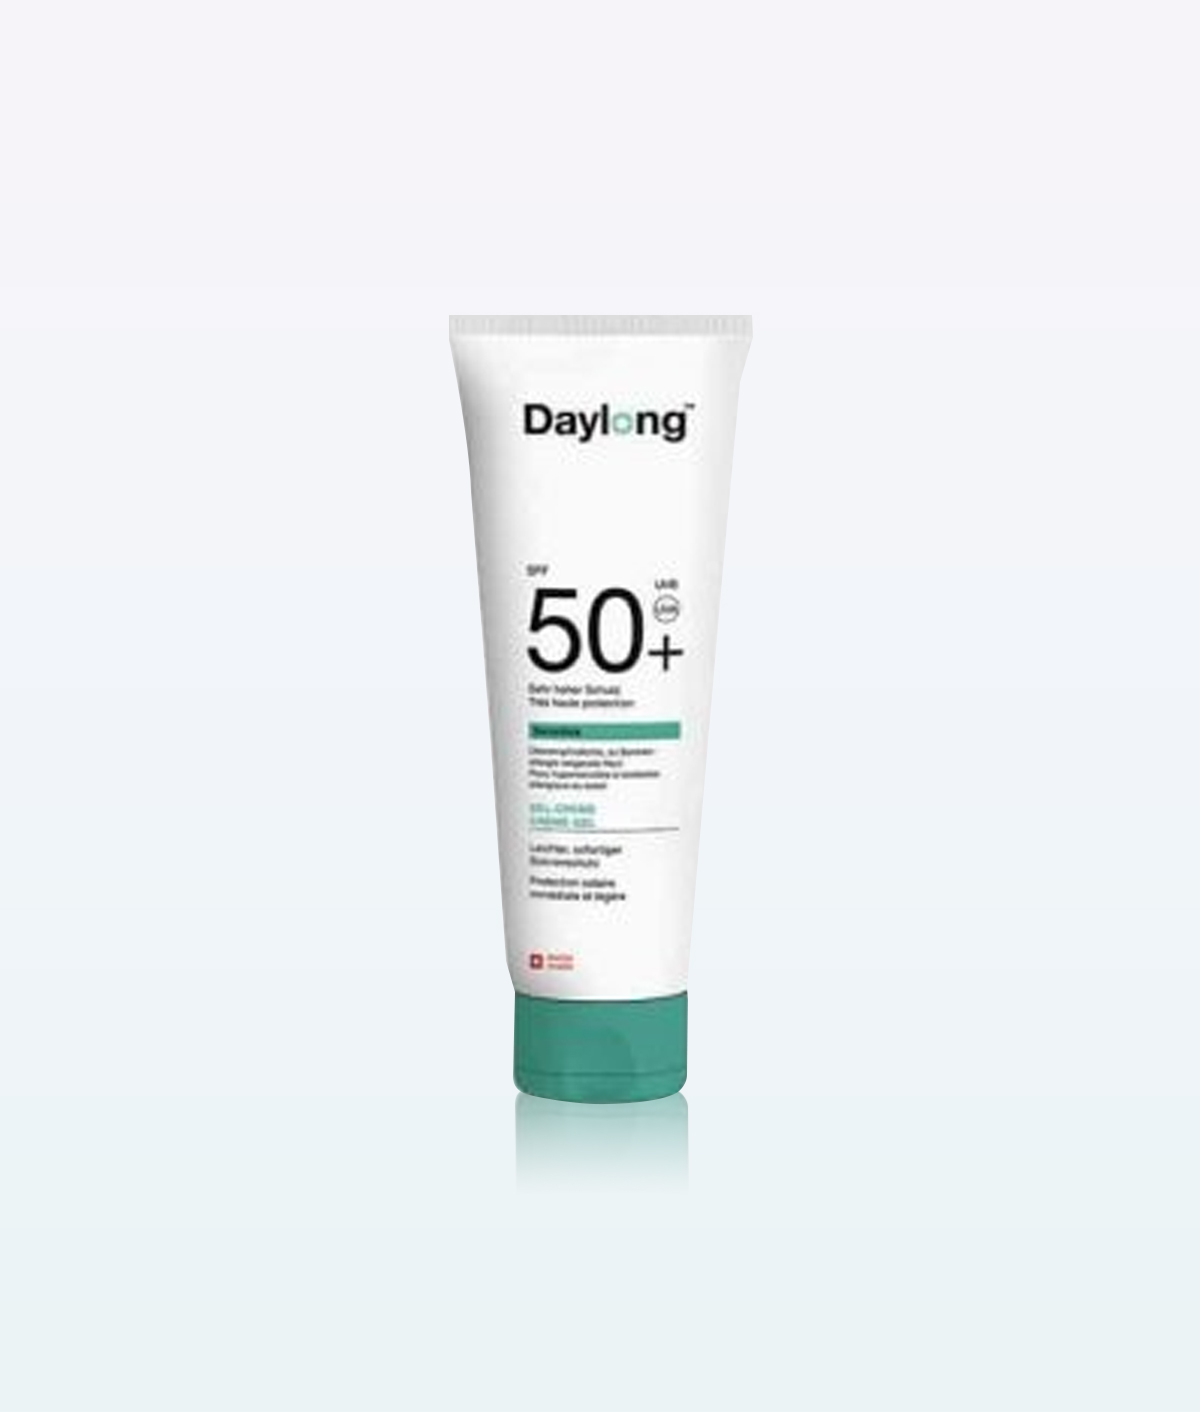 Daylong Cream Suncare SPF 50+